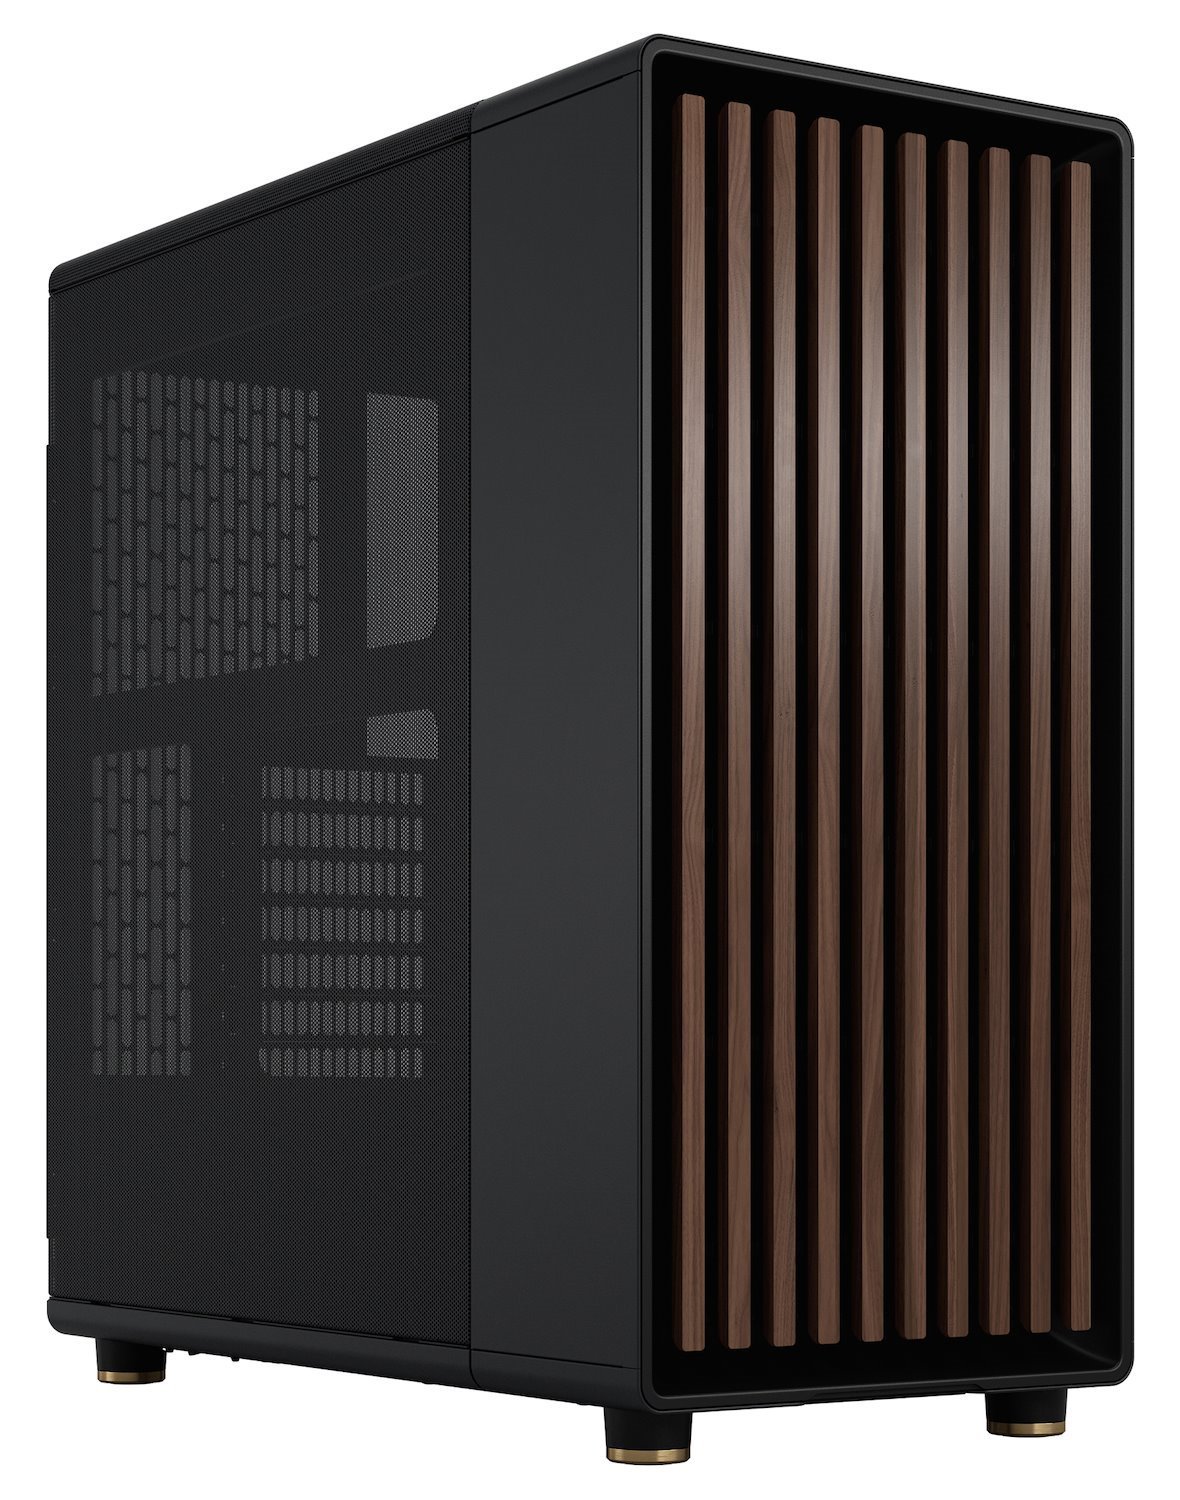 Fractal Design North Charcoal Black ATX Case, Mesh Side Panel, No PSU